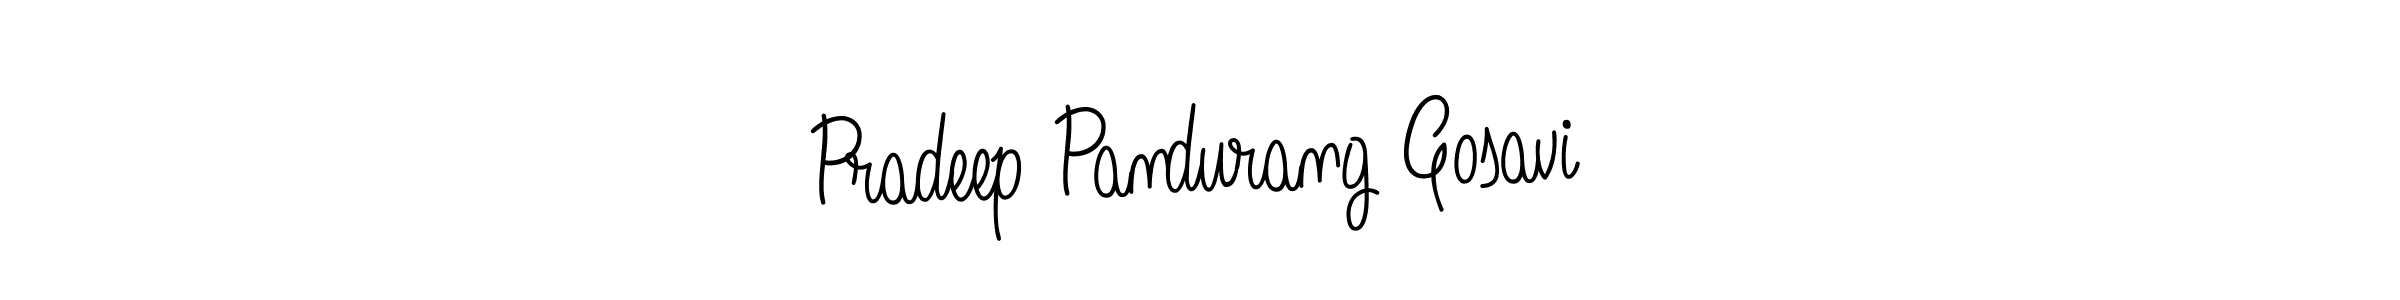 Best and Professional Signature Style for Pradeep Pandurang Gosavi. Angelique-Rose-font-FFP Best Signature Style Collection. Pradeep Pandurang Gosavi signature style 5 images and pictures png